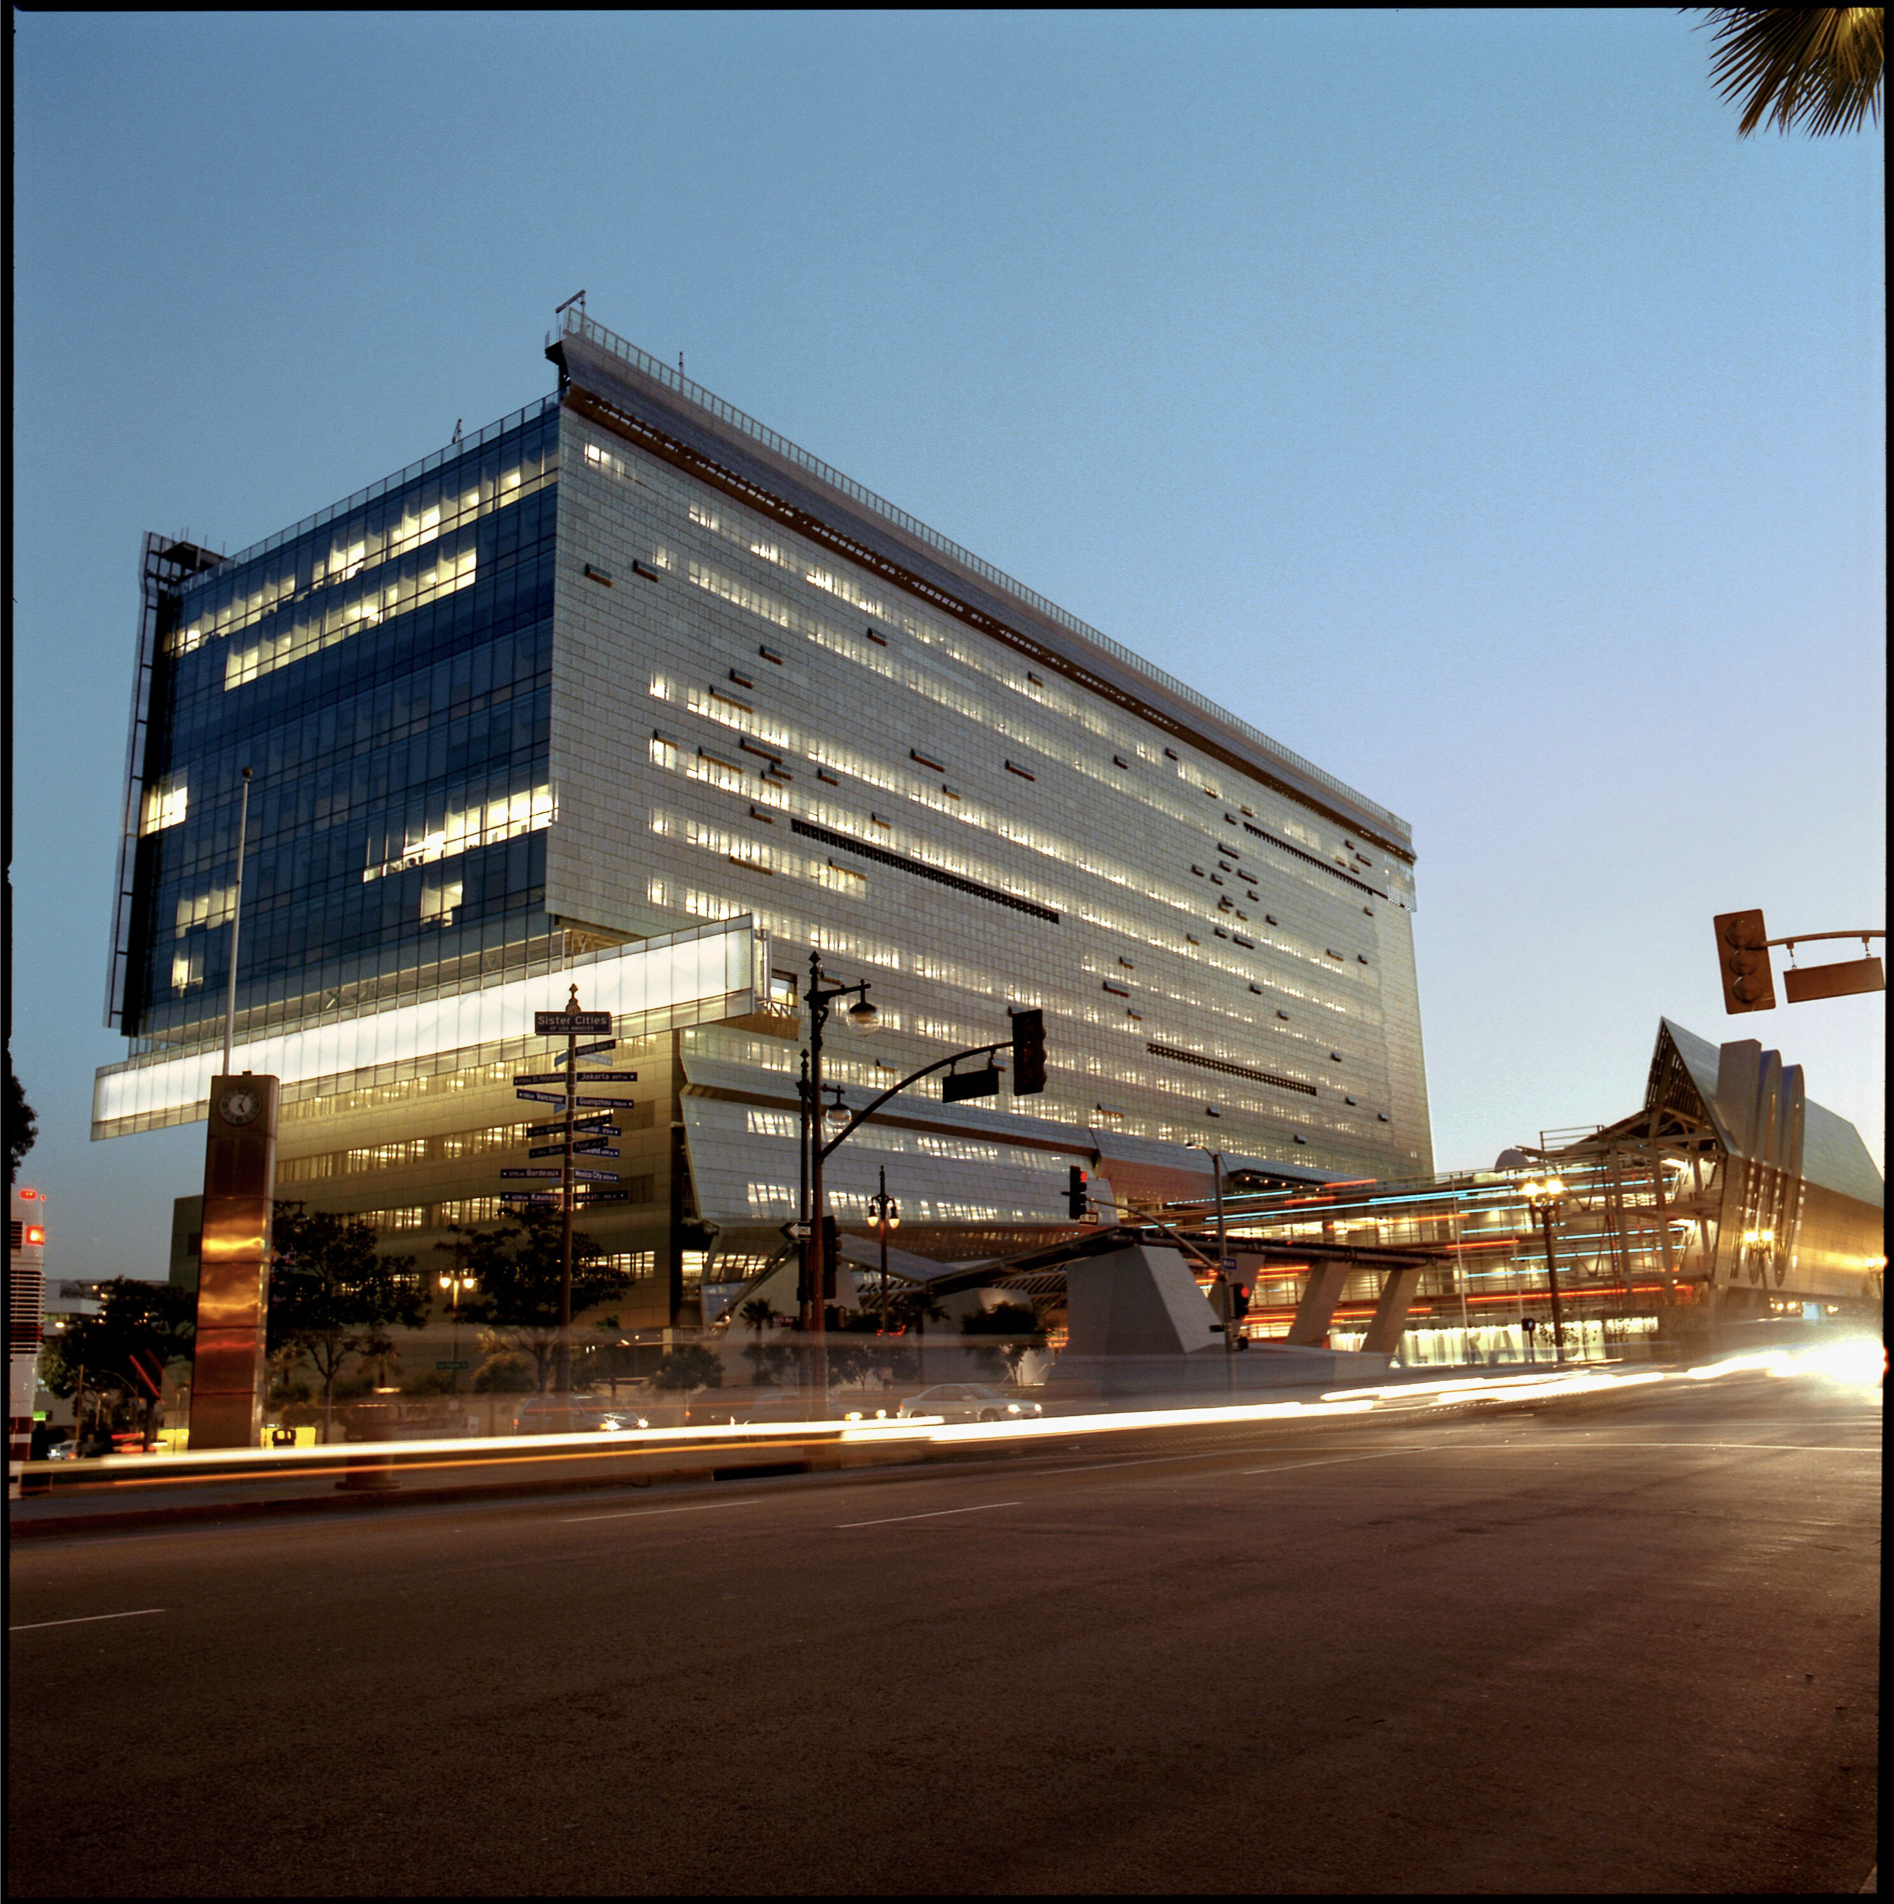 Caltrans Building, Los Angeles, California, Thom Mayne architect, 2005